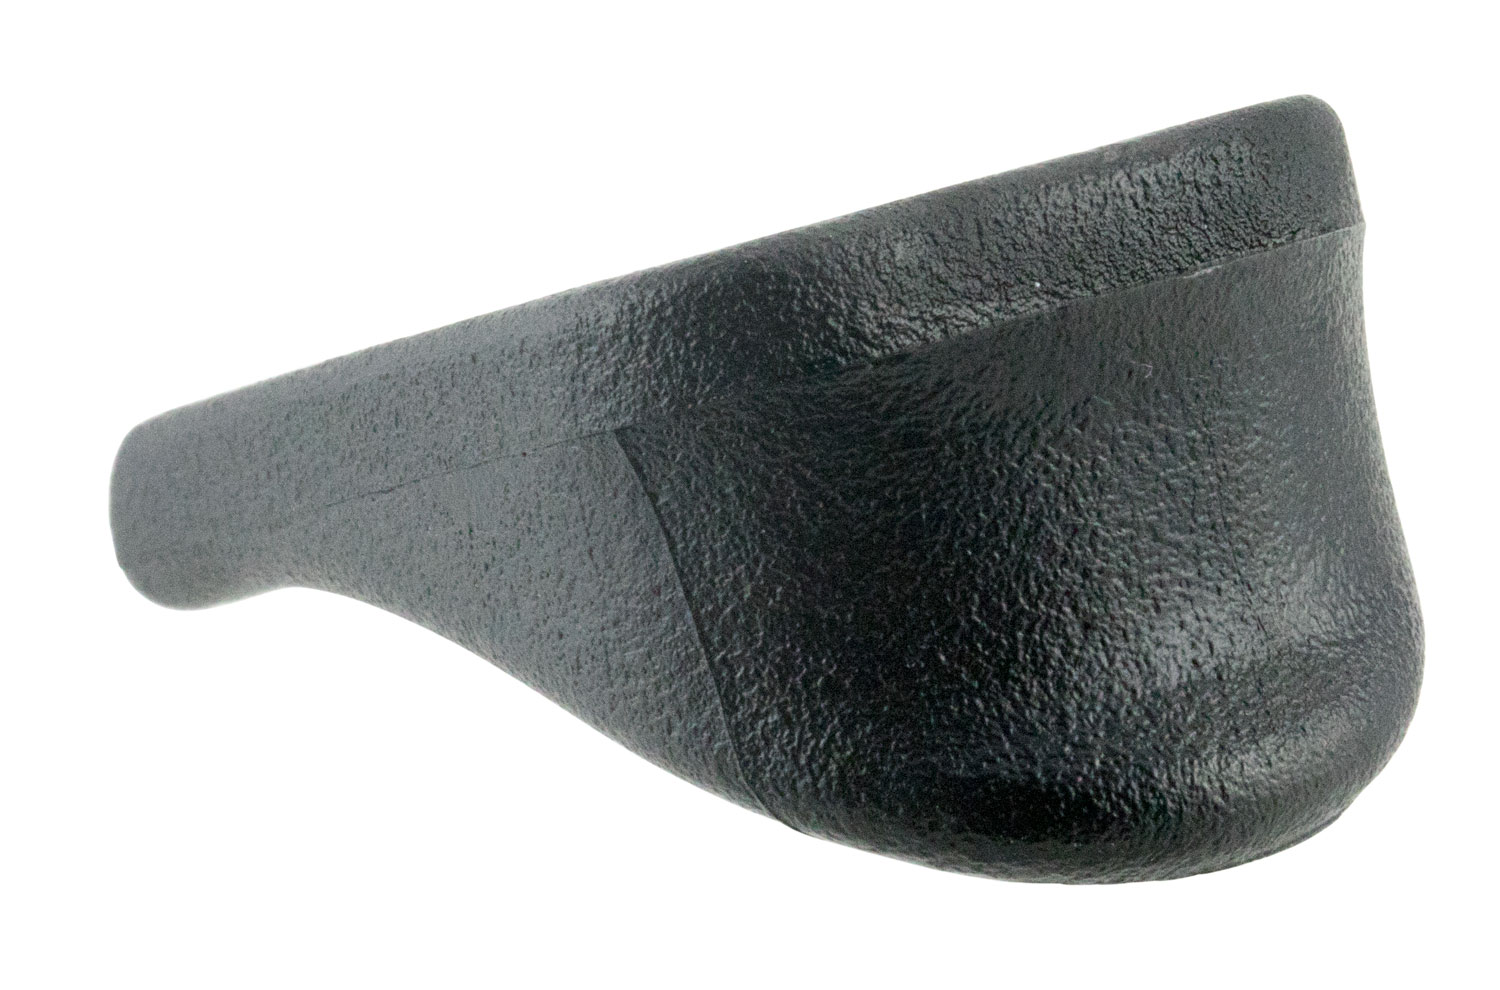 Pearce Grip PG26 Grip Extension G26,27,33,39 Textured Polymer Black